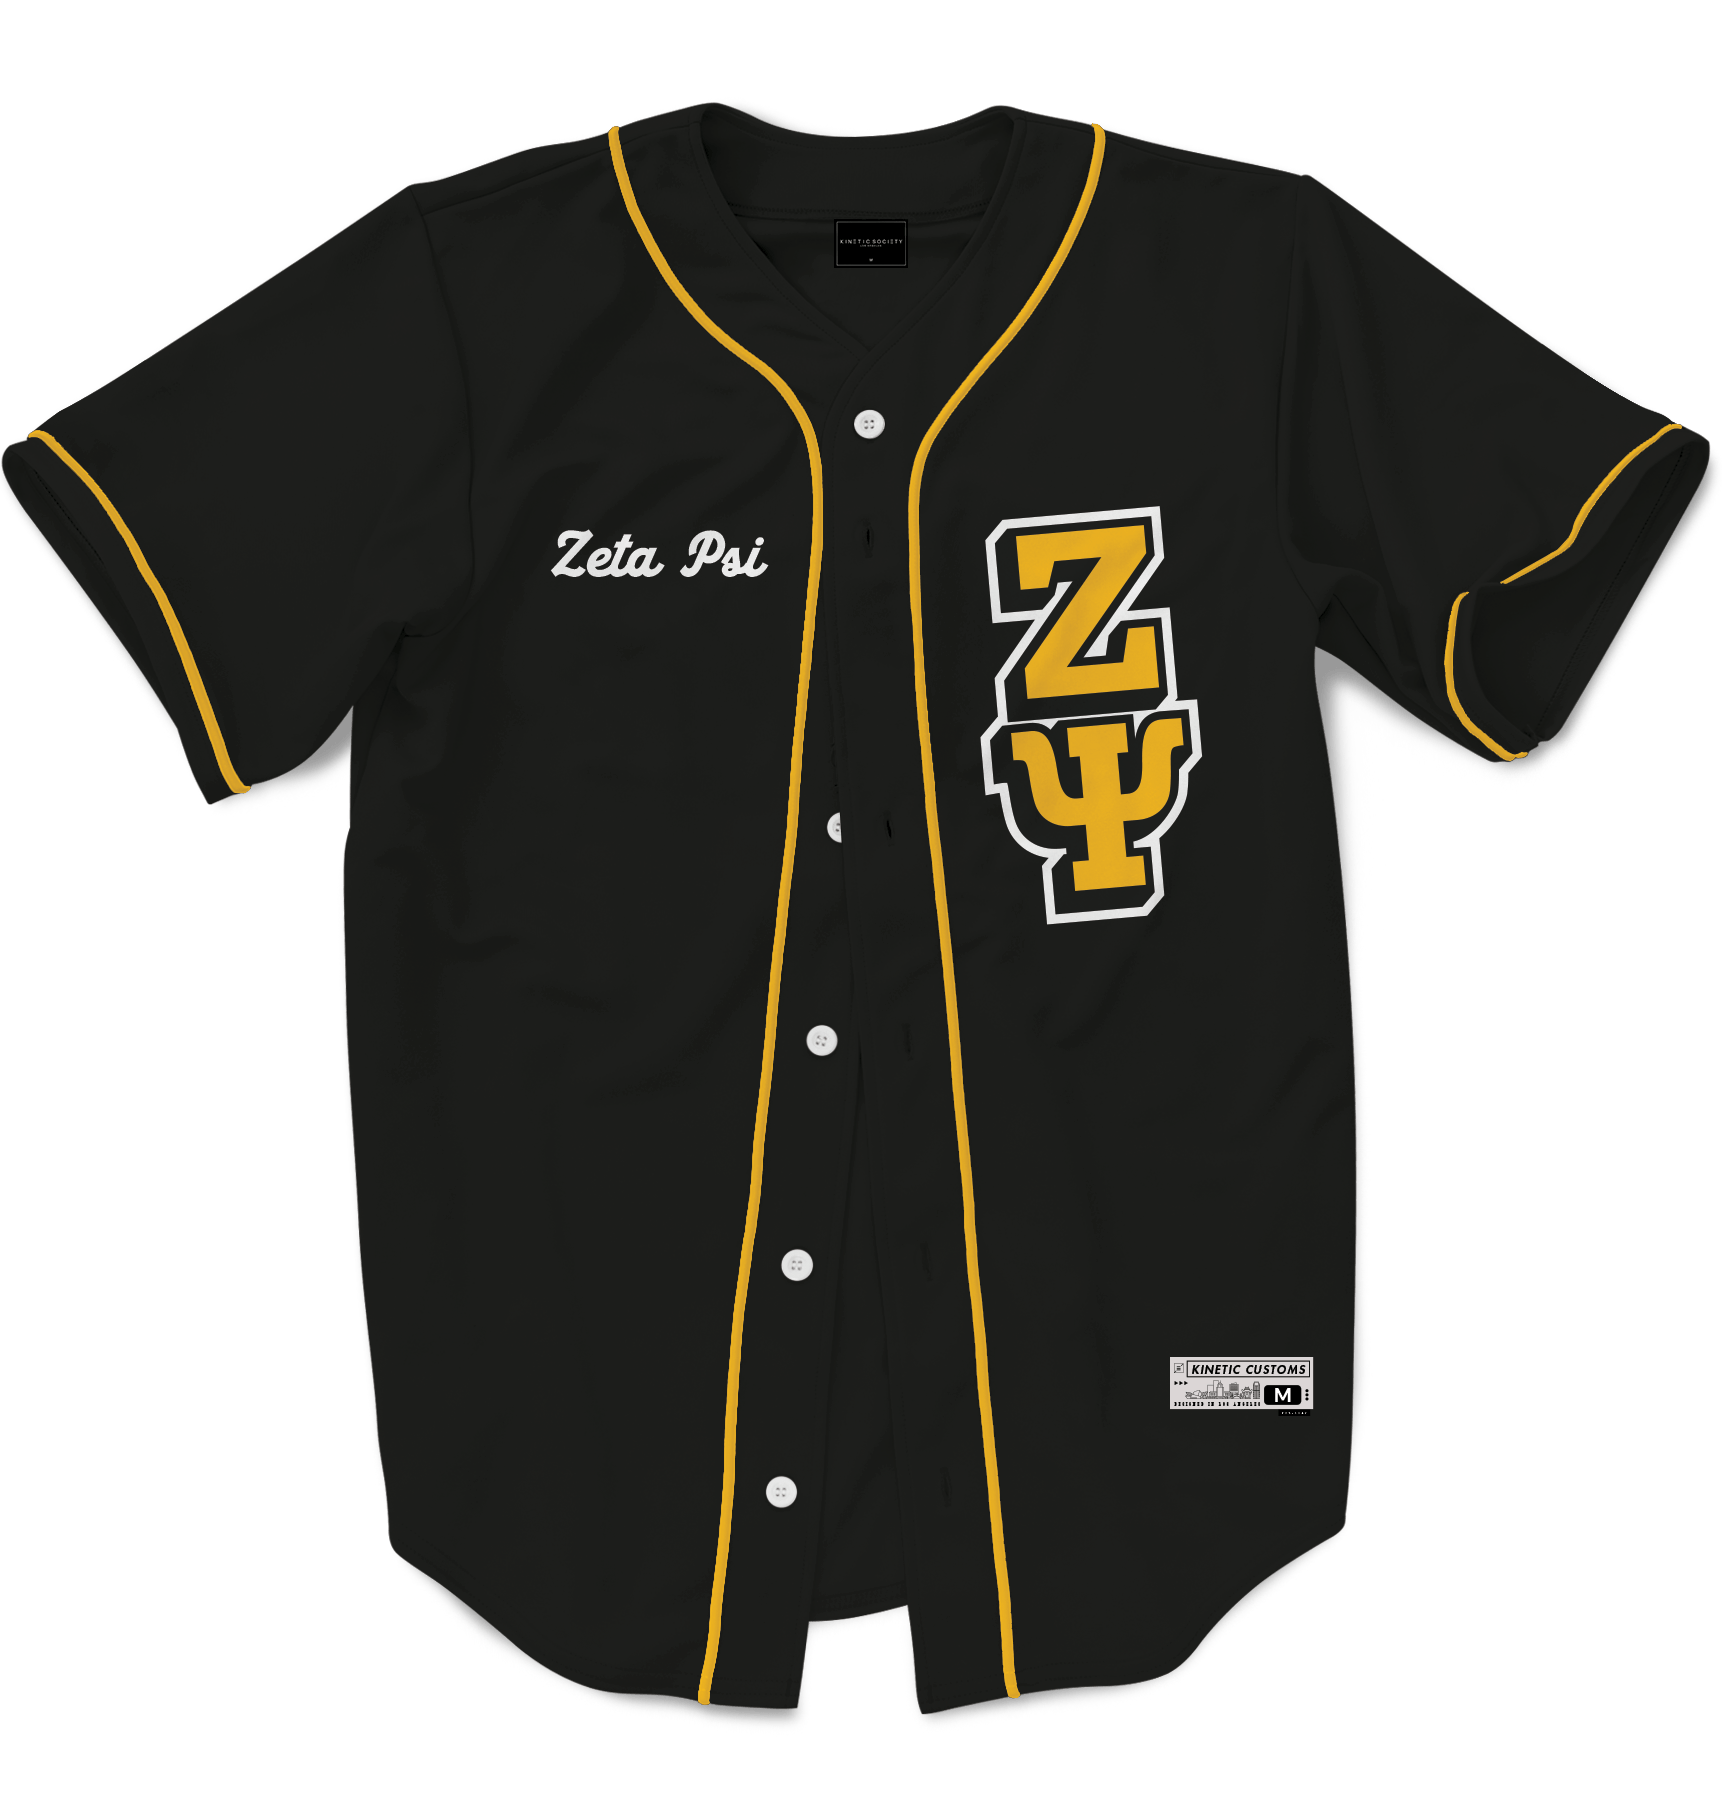 ZETA PSI - The Block Baseball Jersey Premium Baseball Kinetic Society LLC 